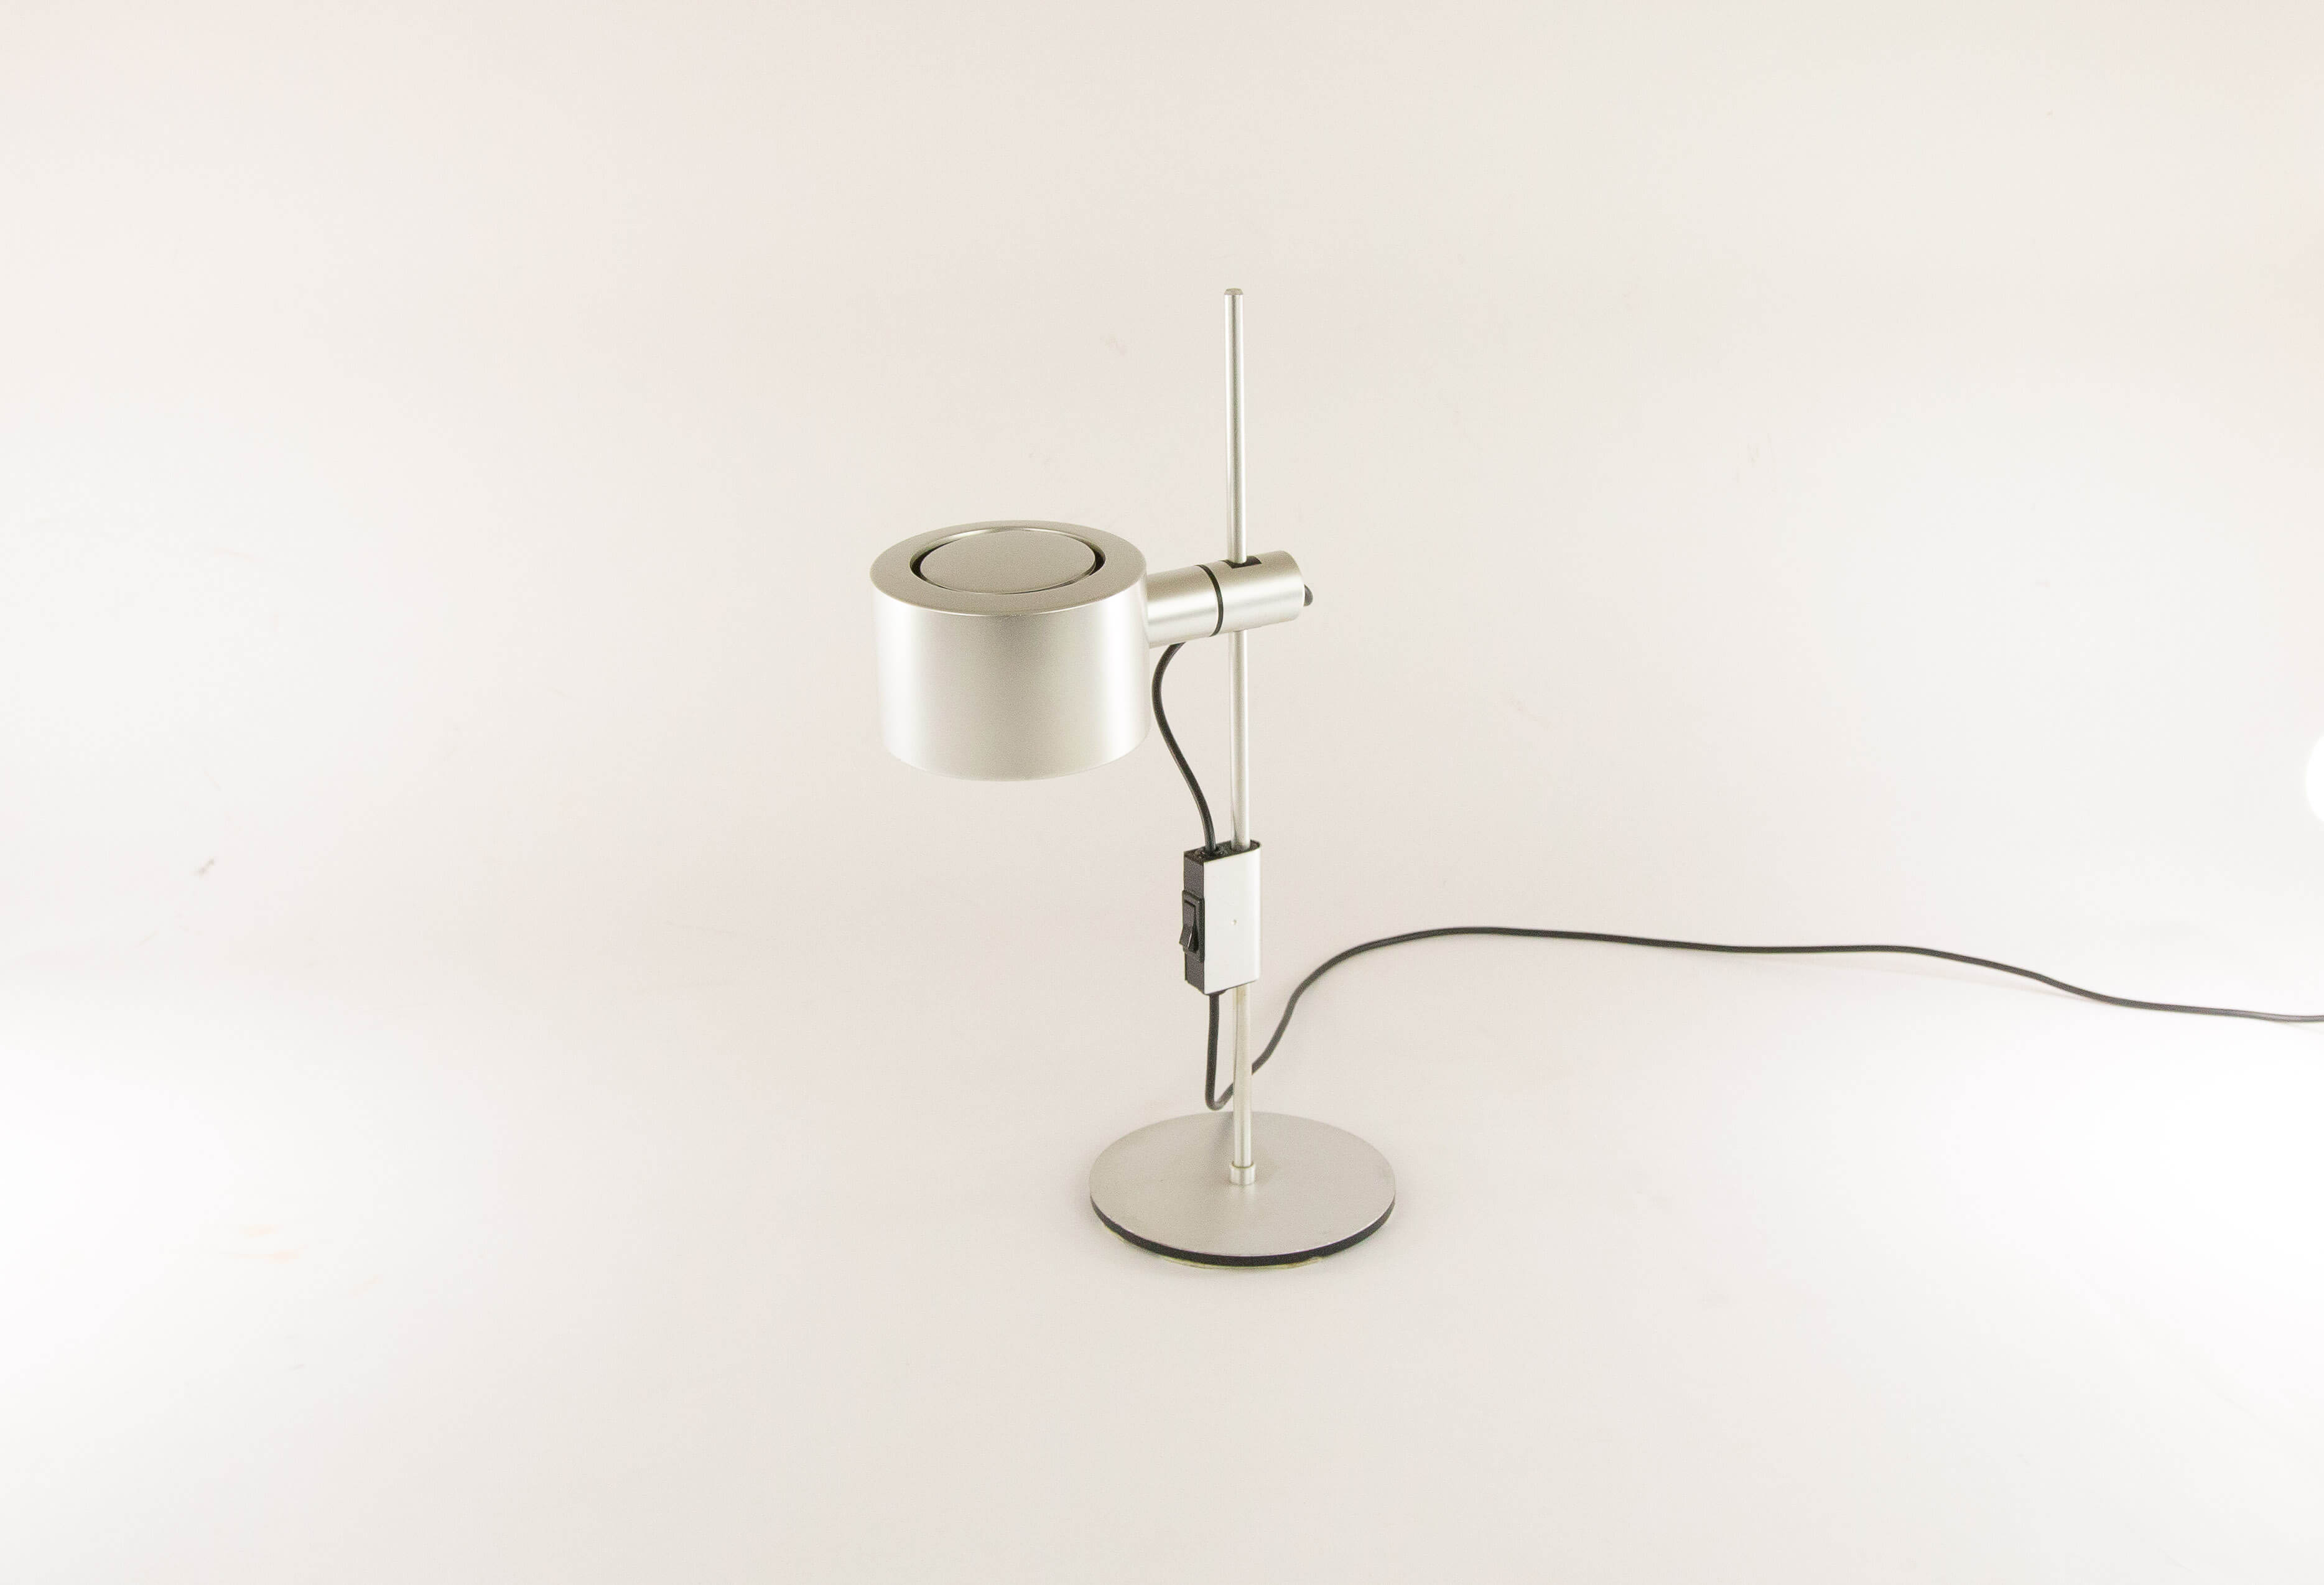 Zoeken achterstalligheid Vertellen Aluminium table lamp by Ronald Homes for Conelight Limited, 1960s - Palainco